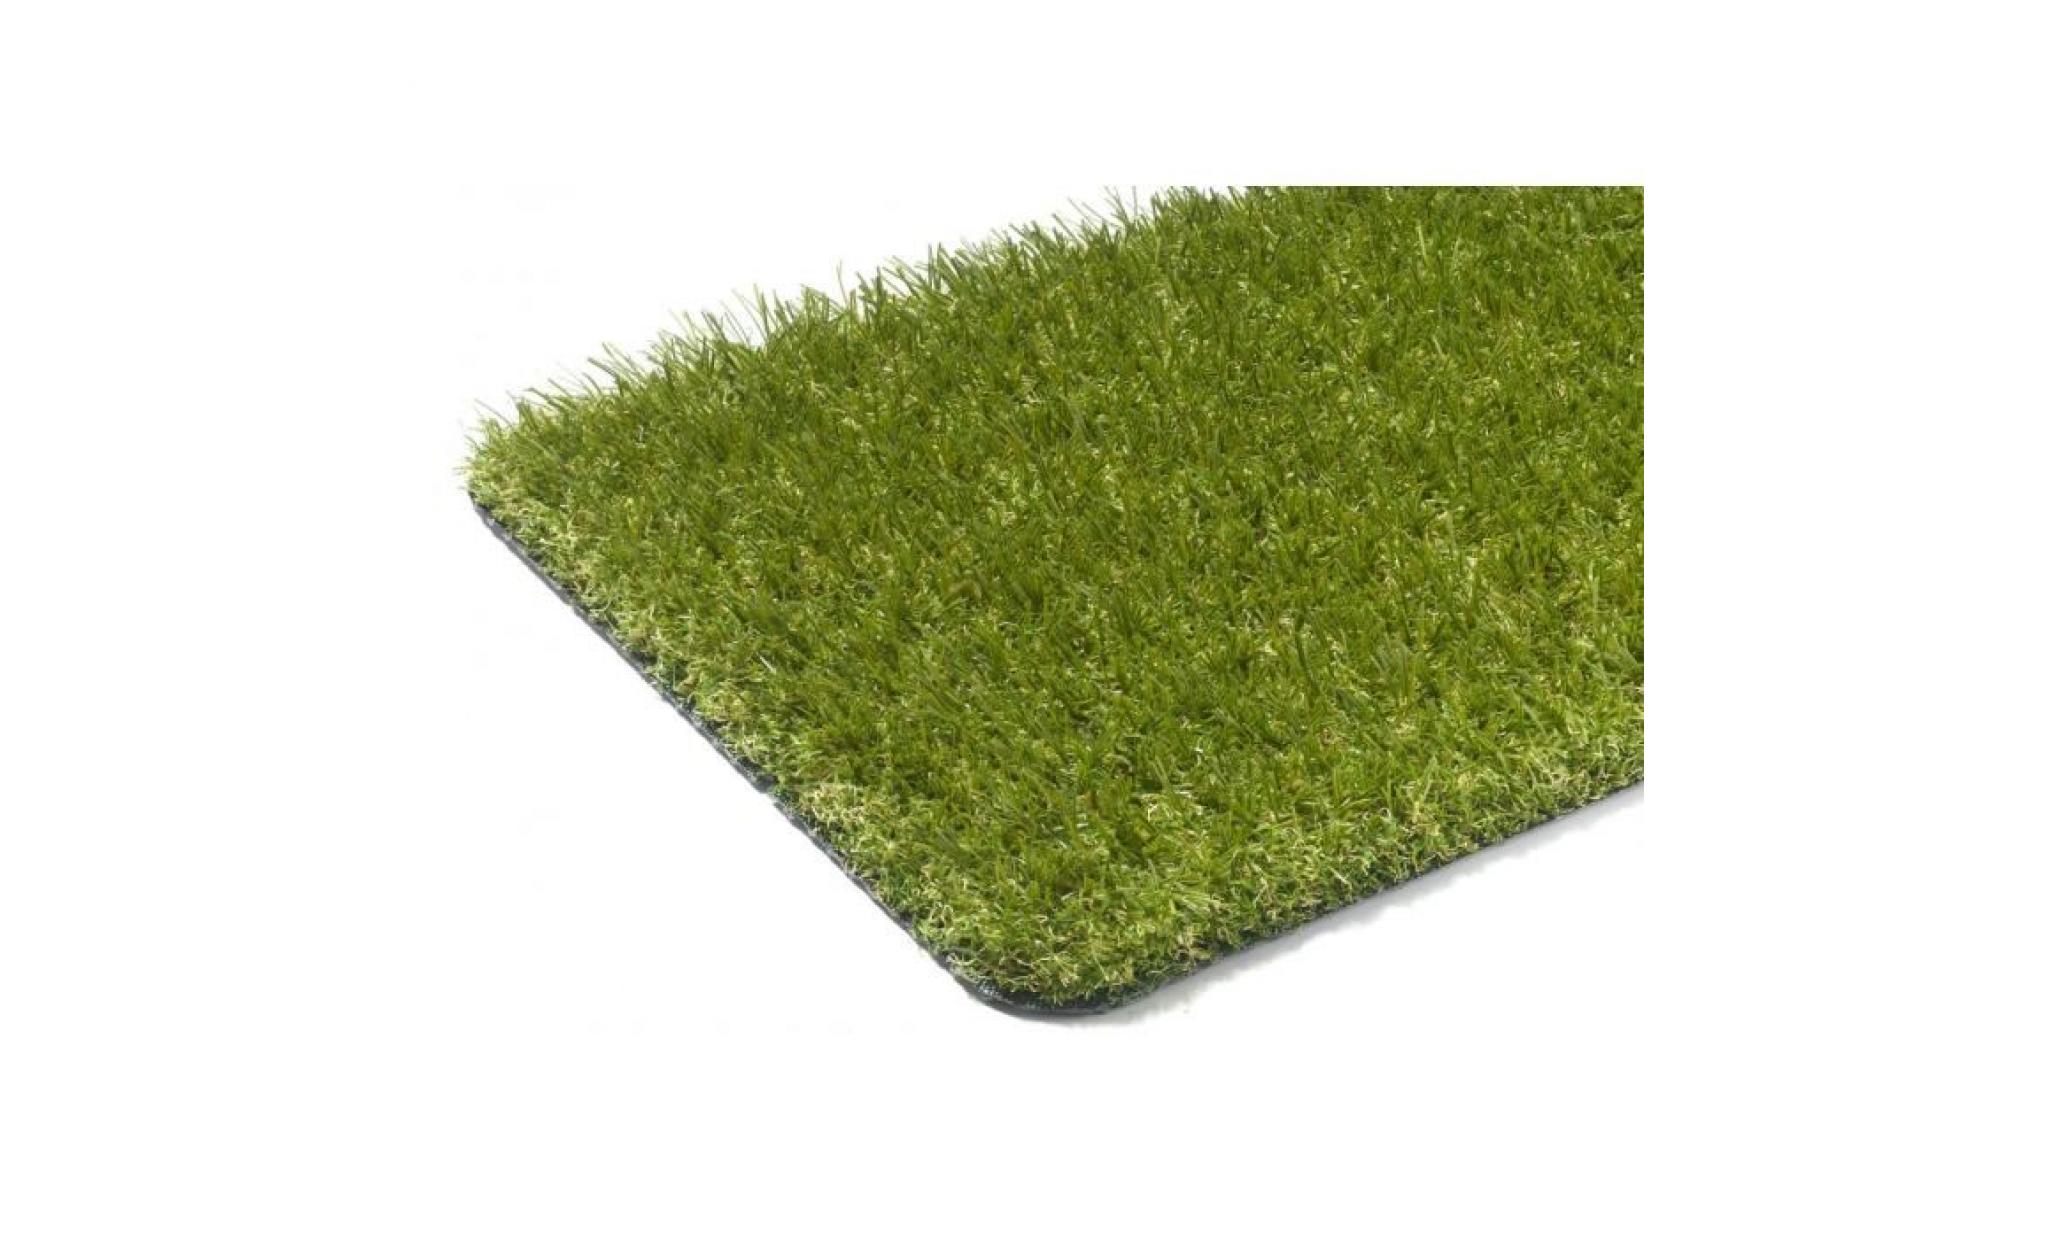 wembley   tapis type luxe gazon artificiel – pour jardin, terrasse, balcon   vert  [200x200 cm]